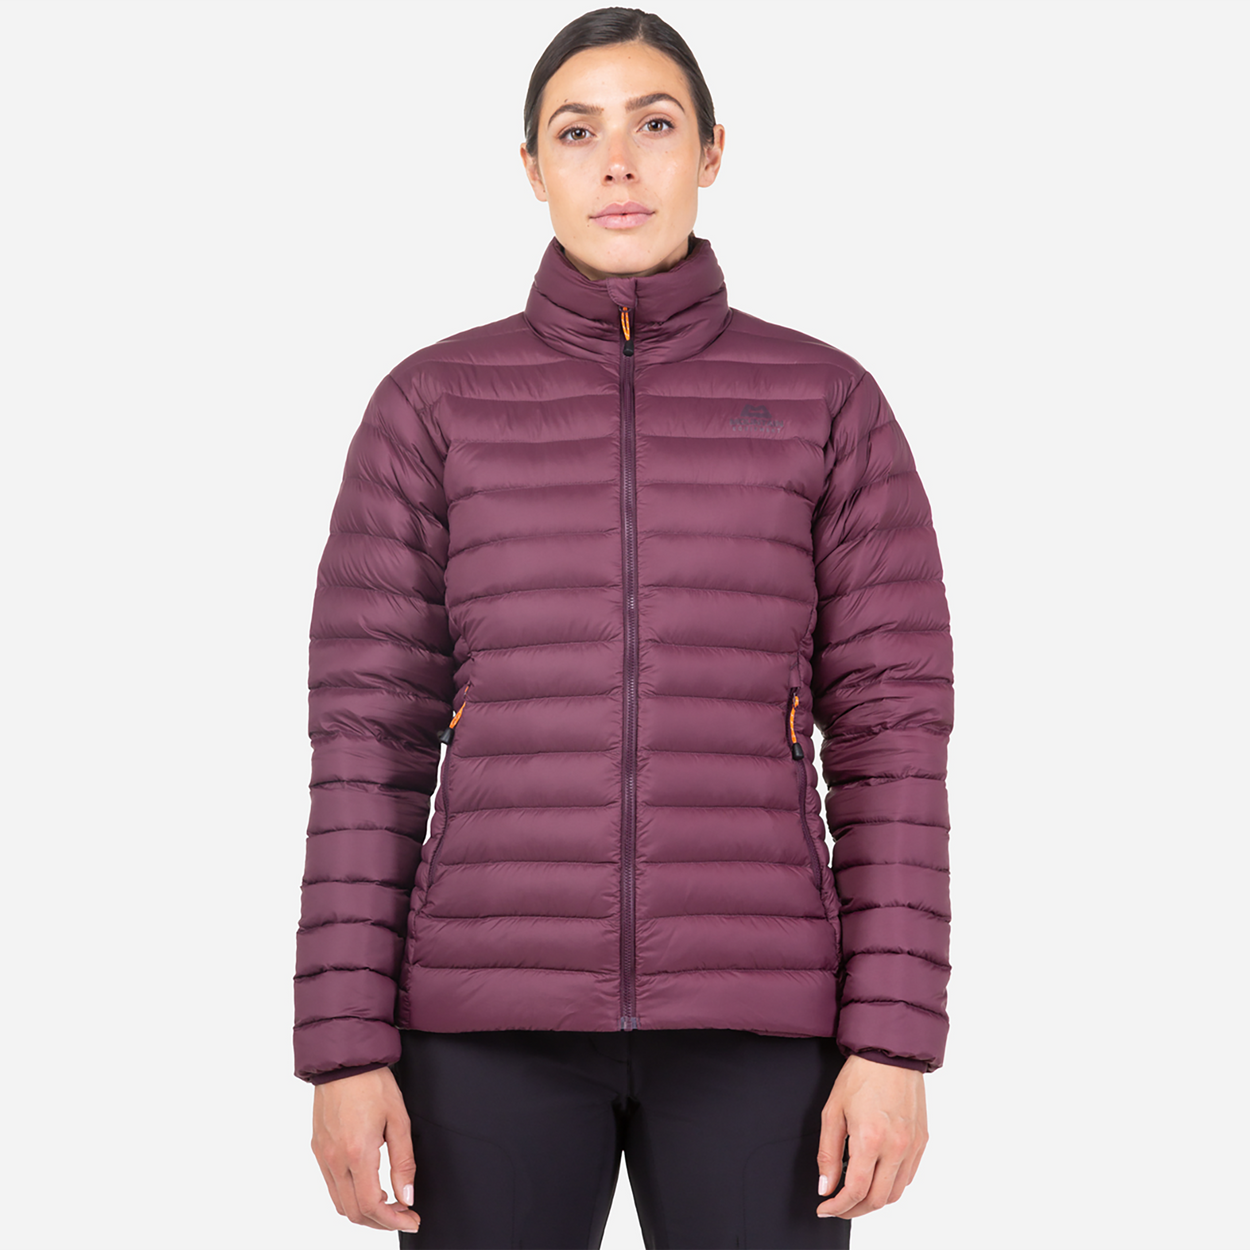 Earthrise Women's Jacket | Mountain Equipment